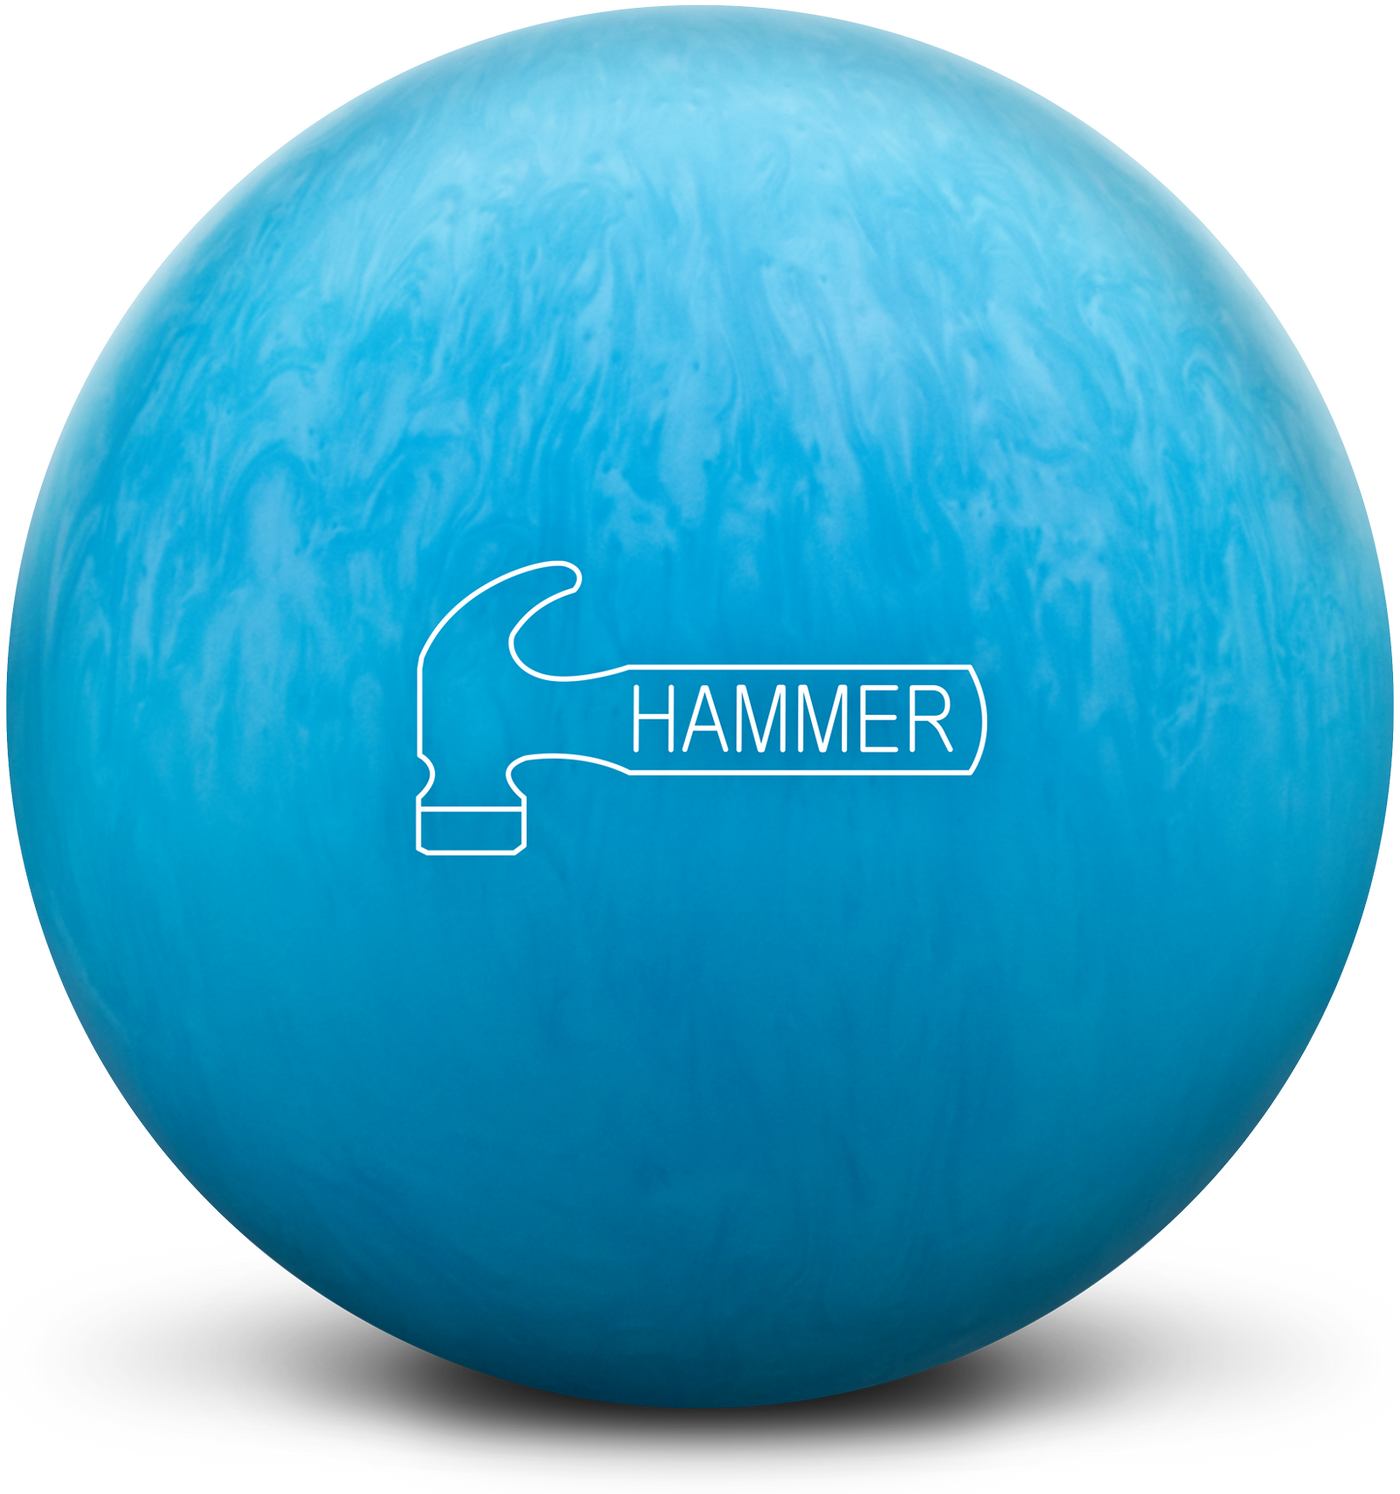 NU Blue Hammer bowling ball brand logo side